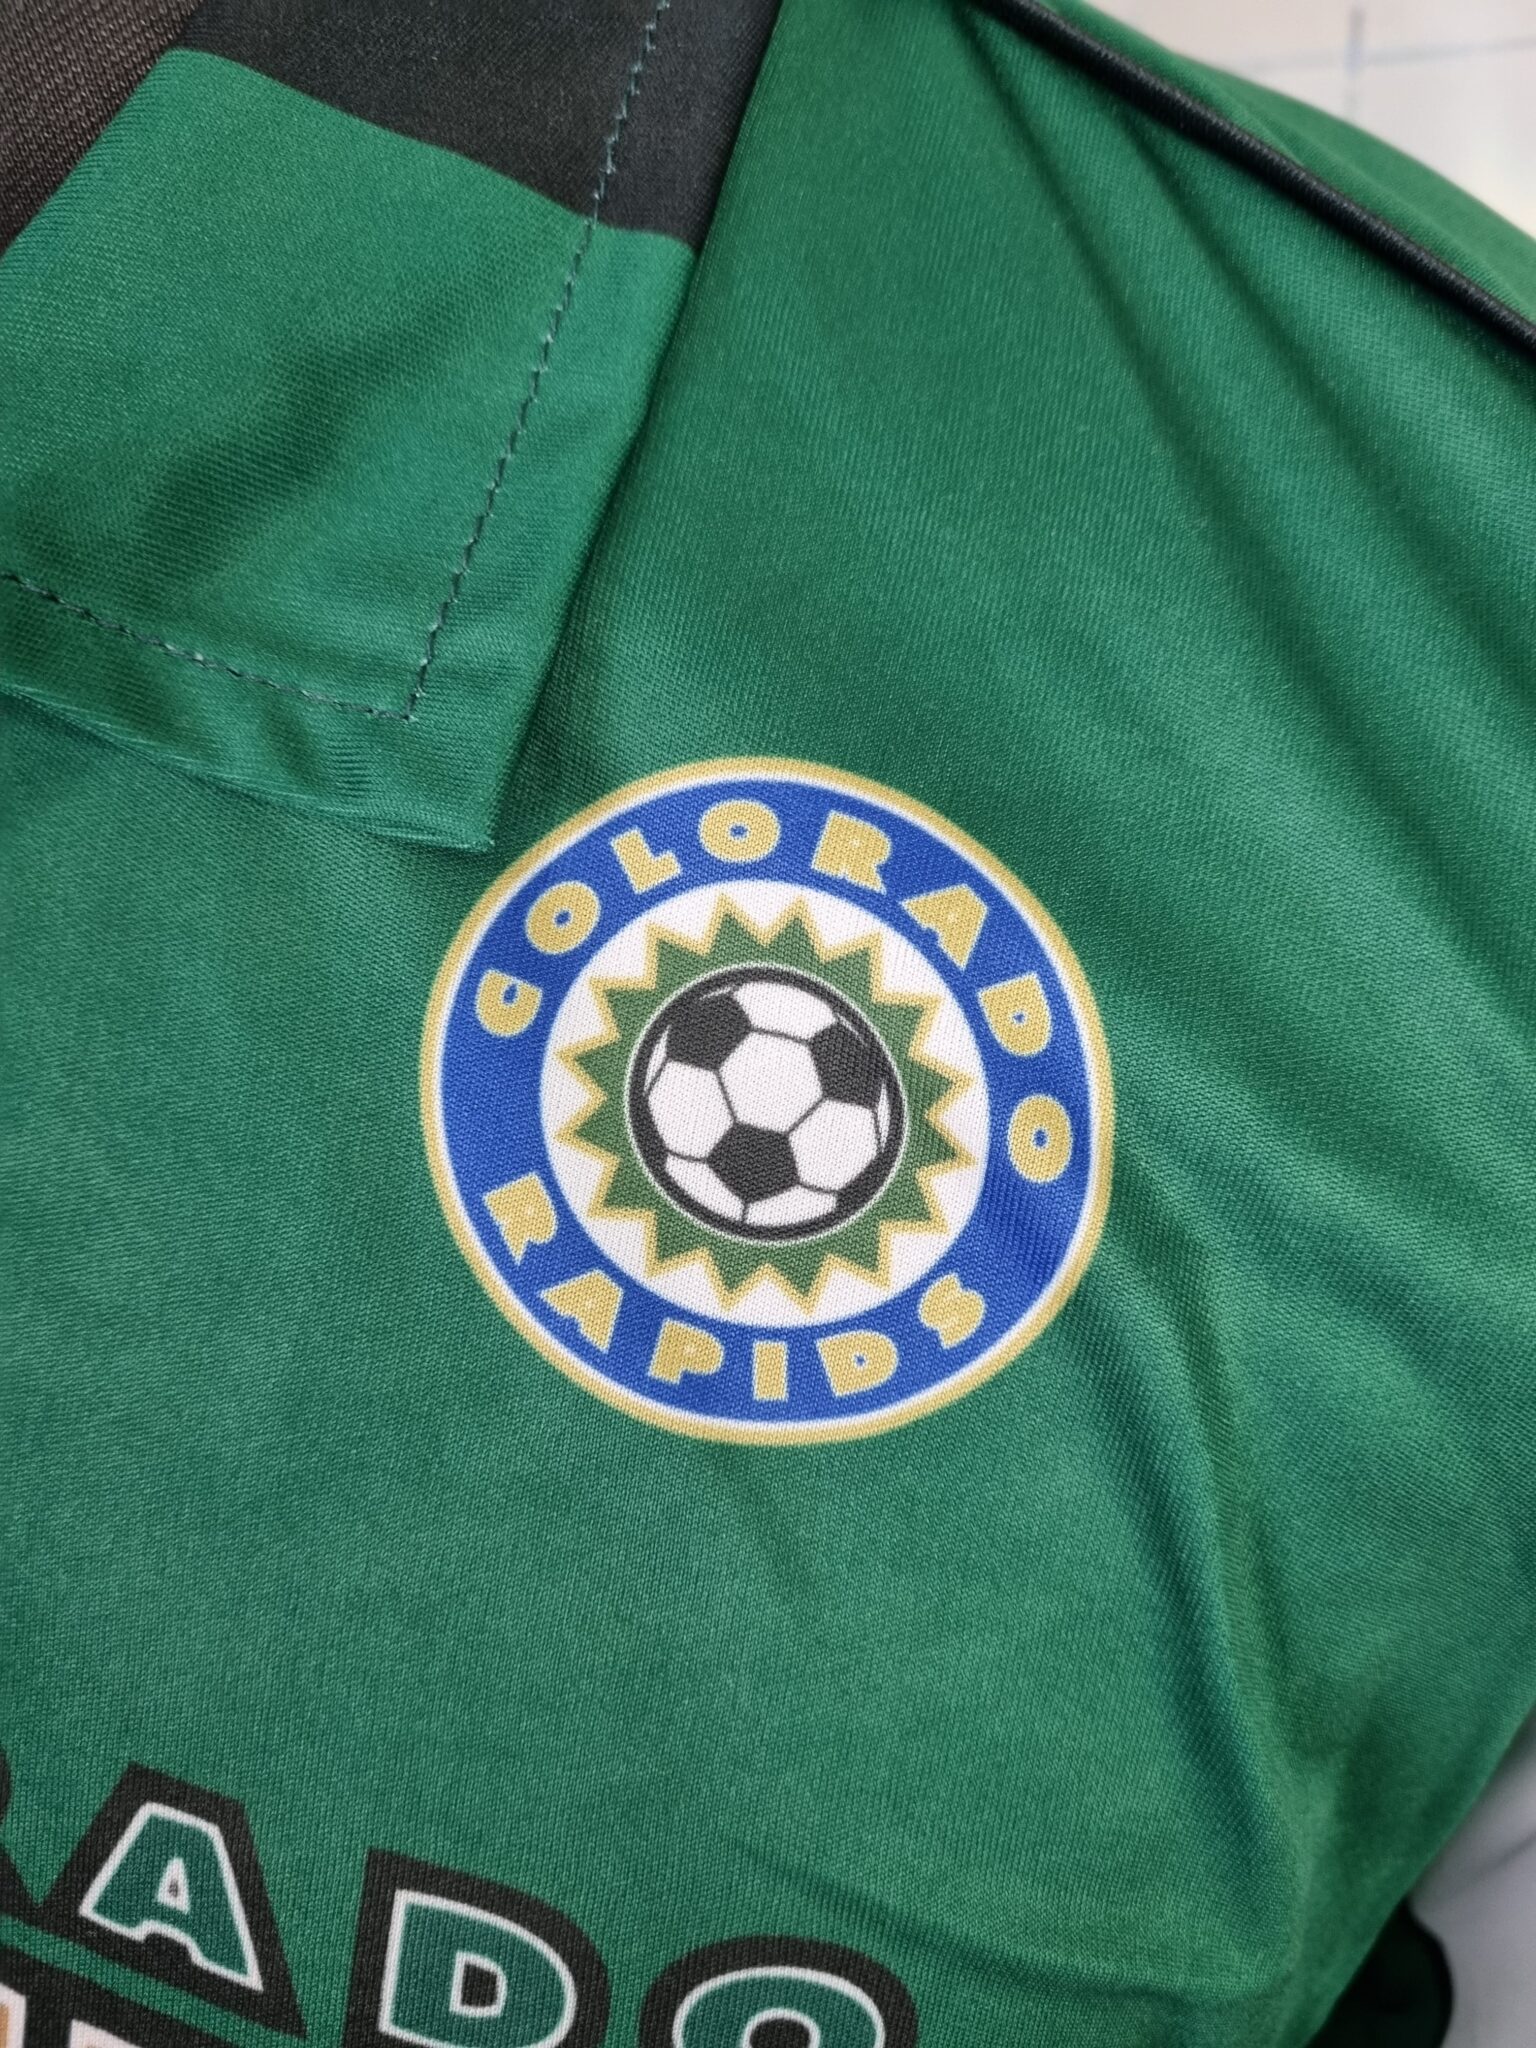 Colorado Rapids Away Soccer Jersey 1999 Retro Shirt USA MLS Pepsi - Sport Club Memories